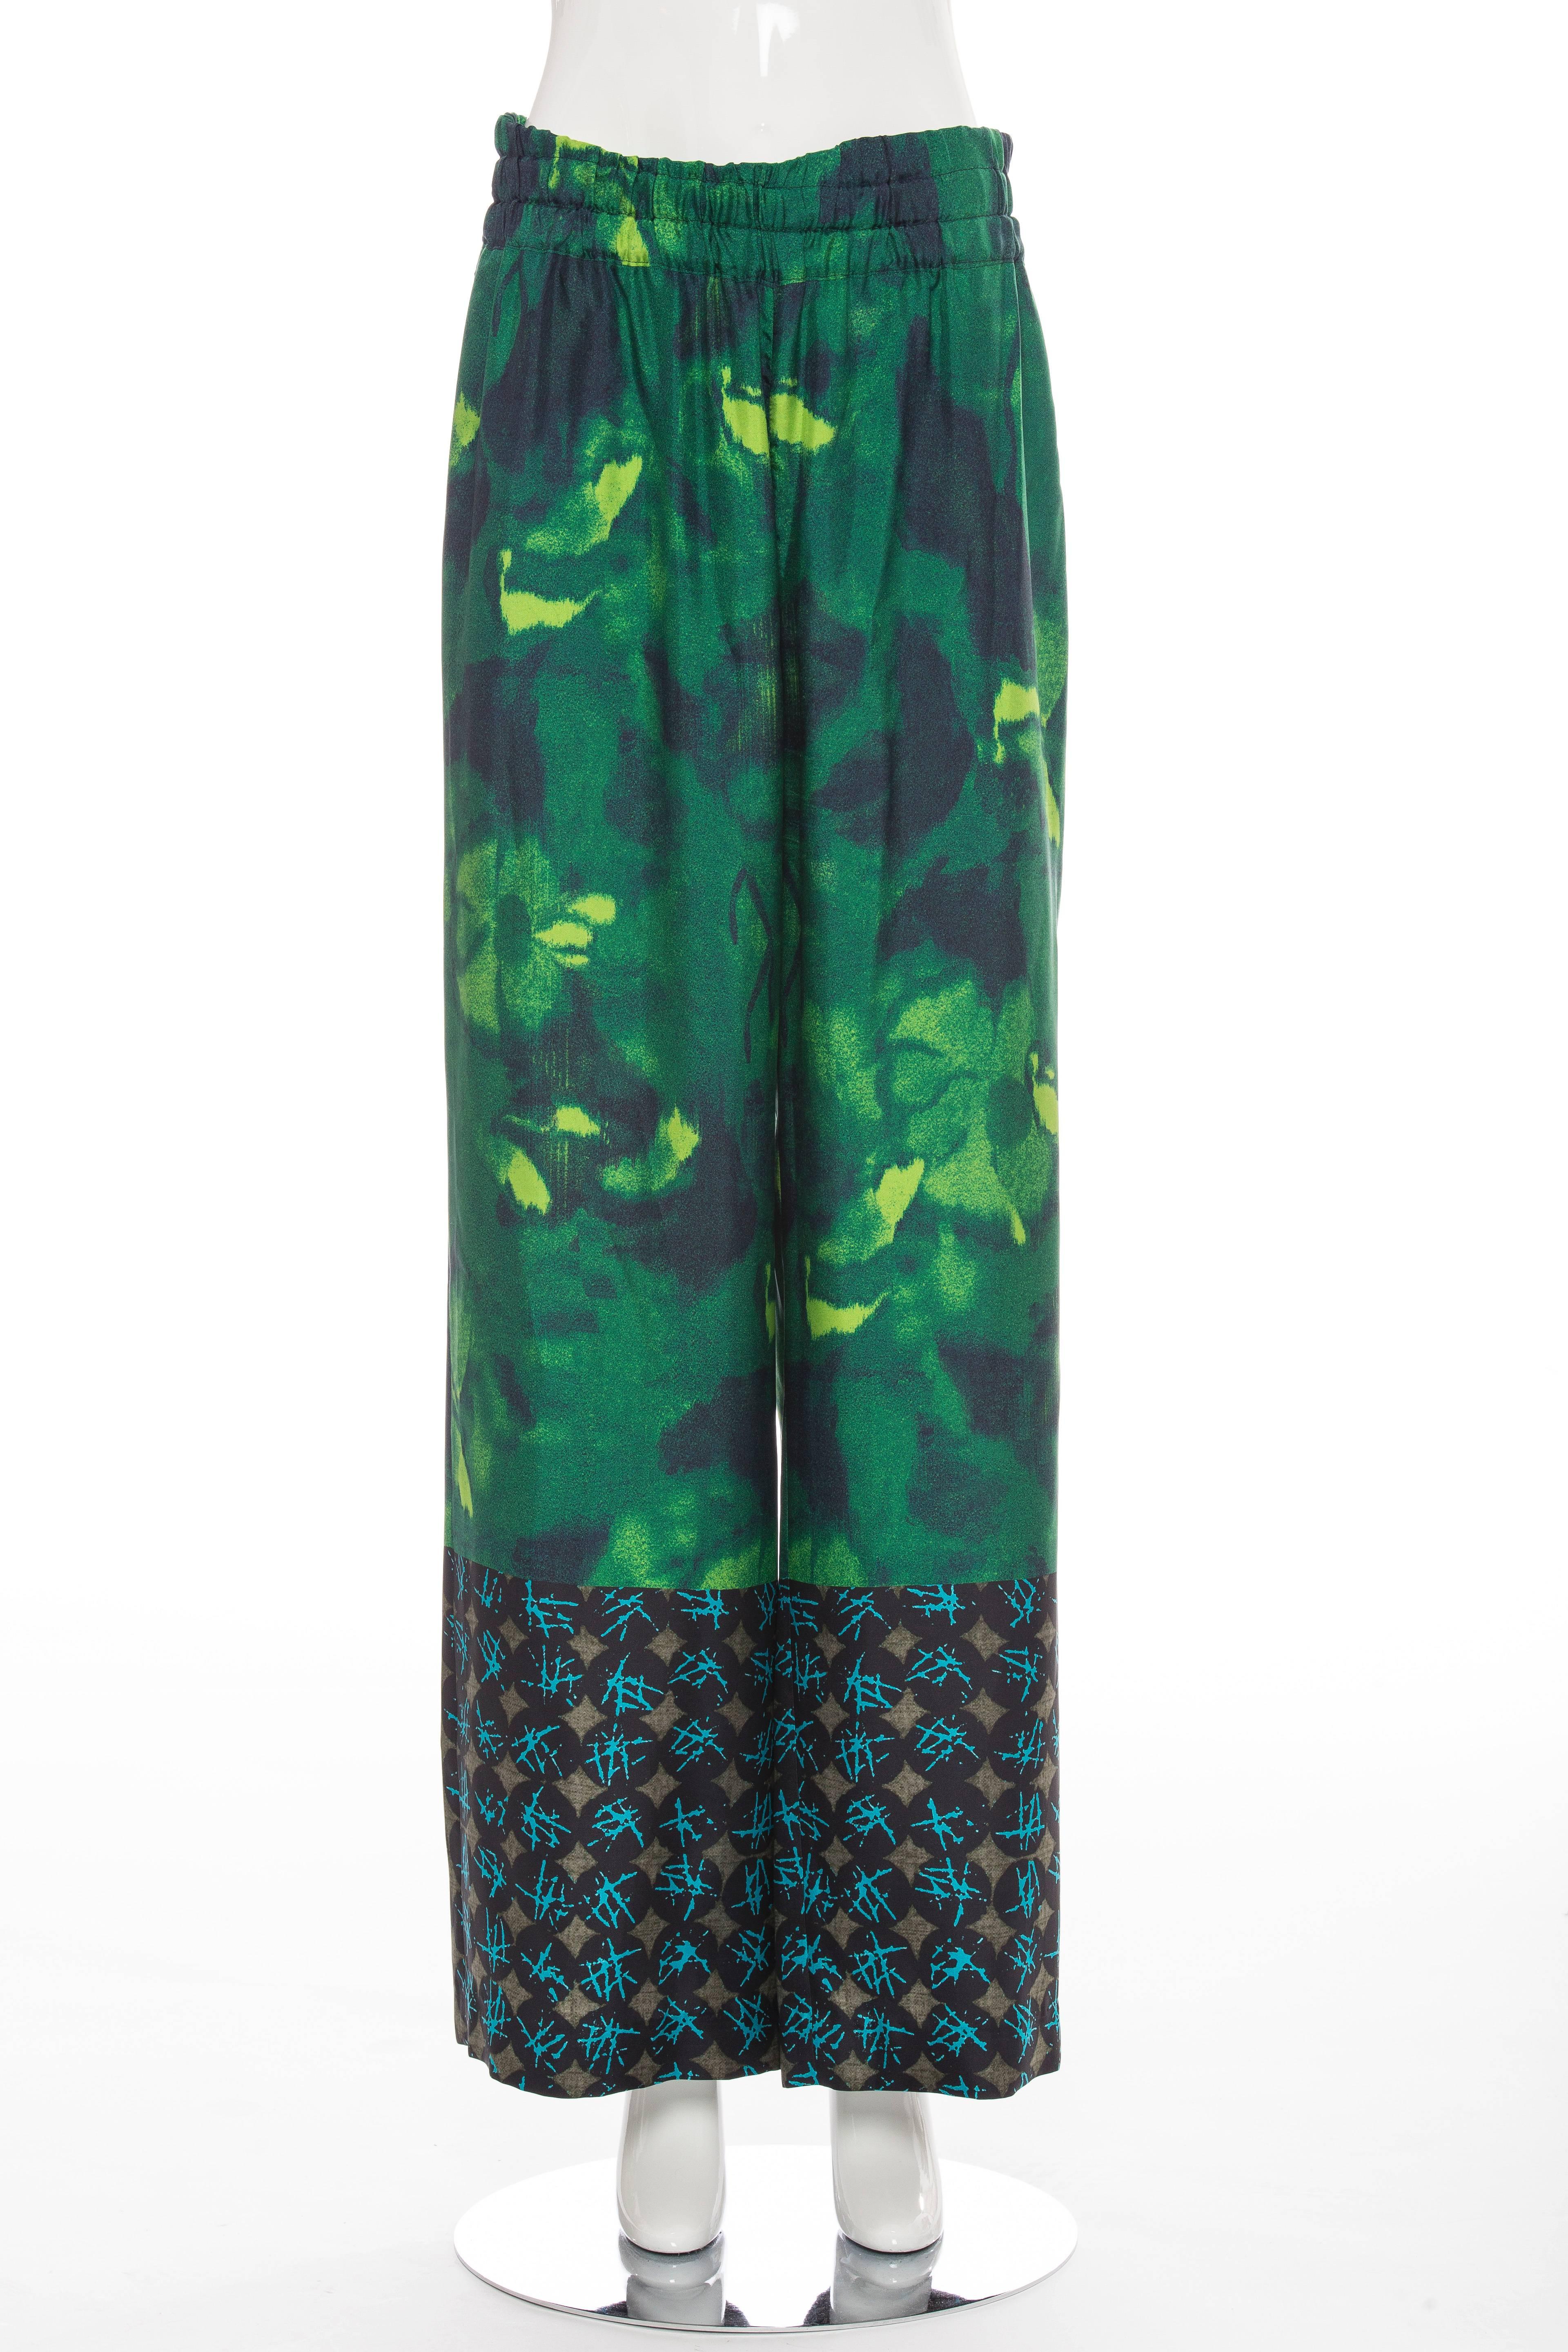 Dries Van Noten Printed Linen Silk Bead & Cabachons Pant Suit, Spring 2008 3